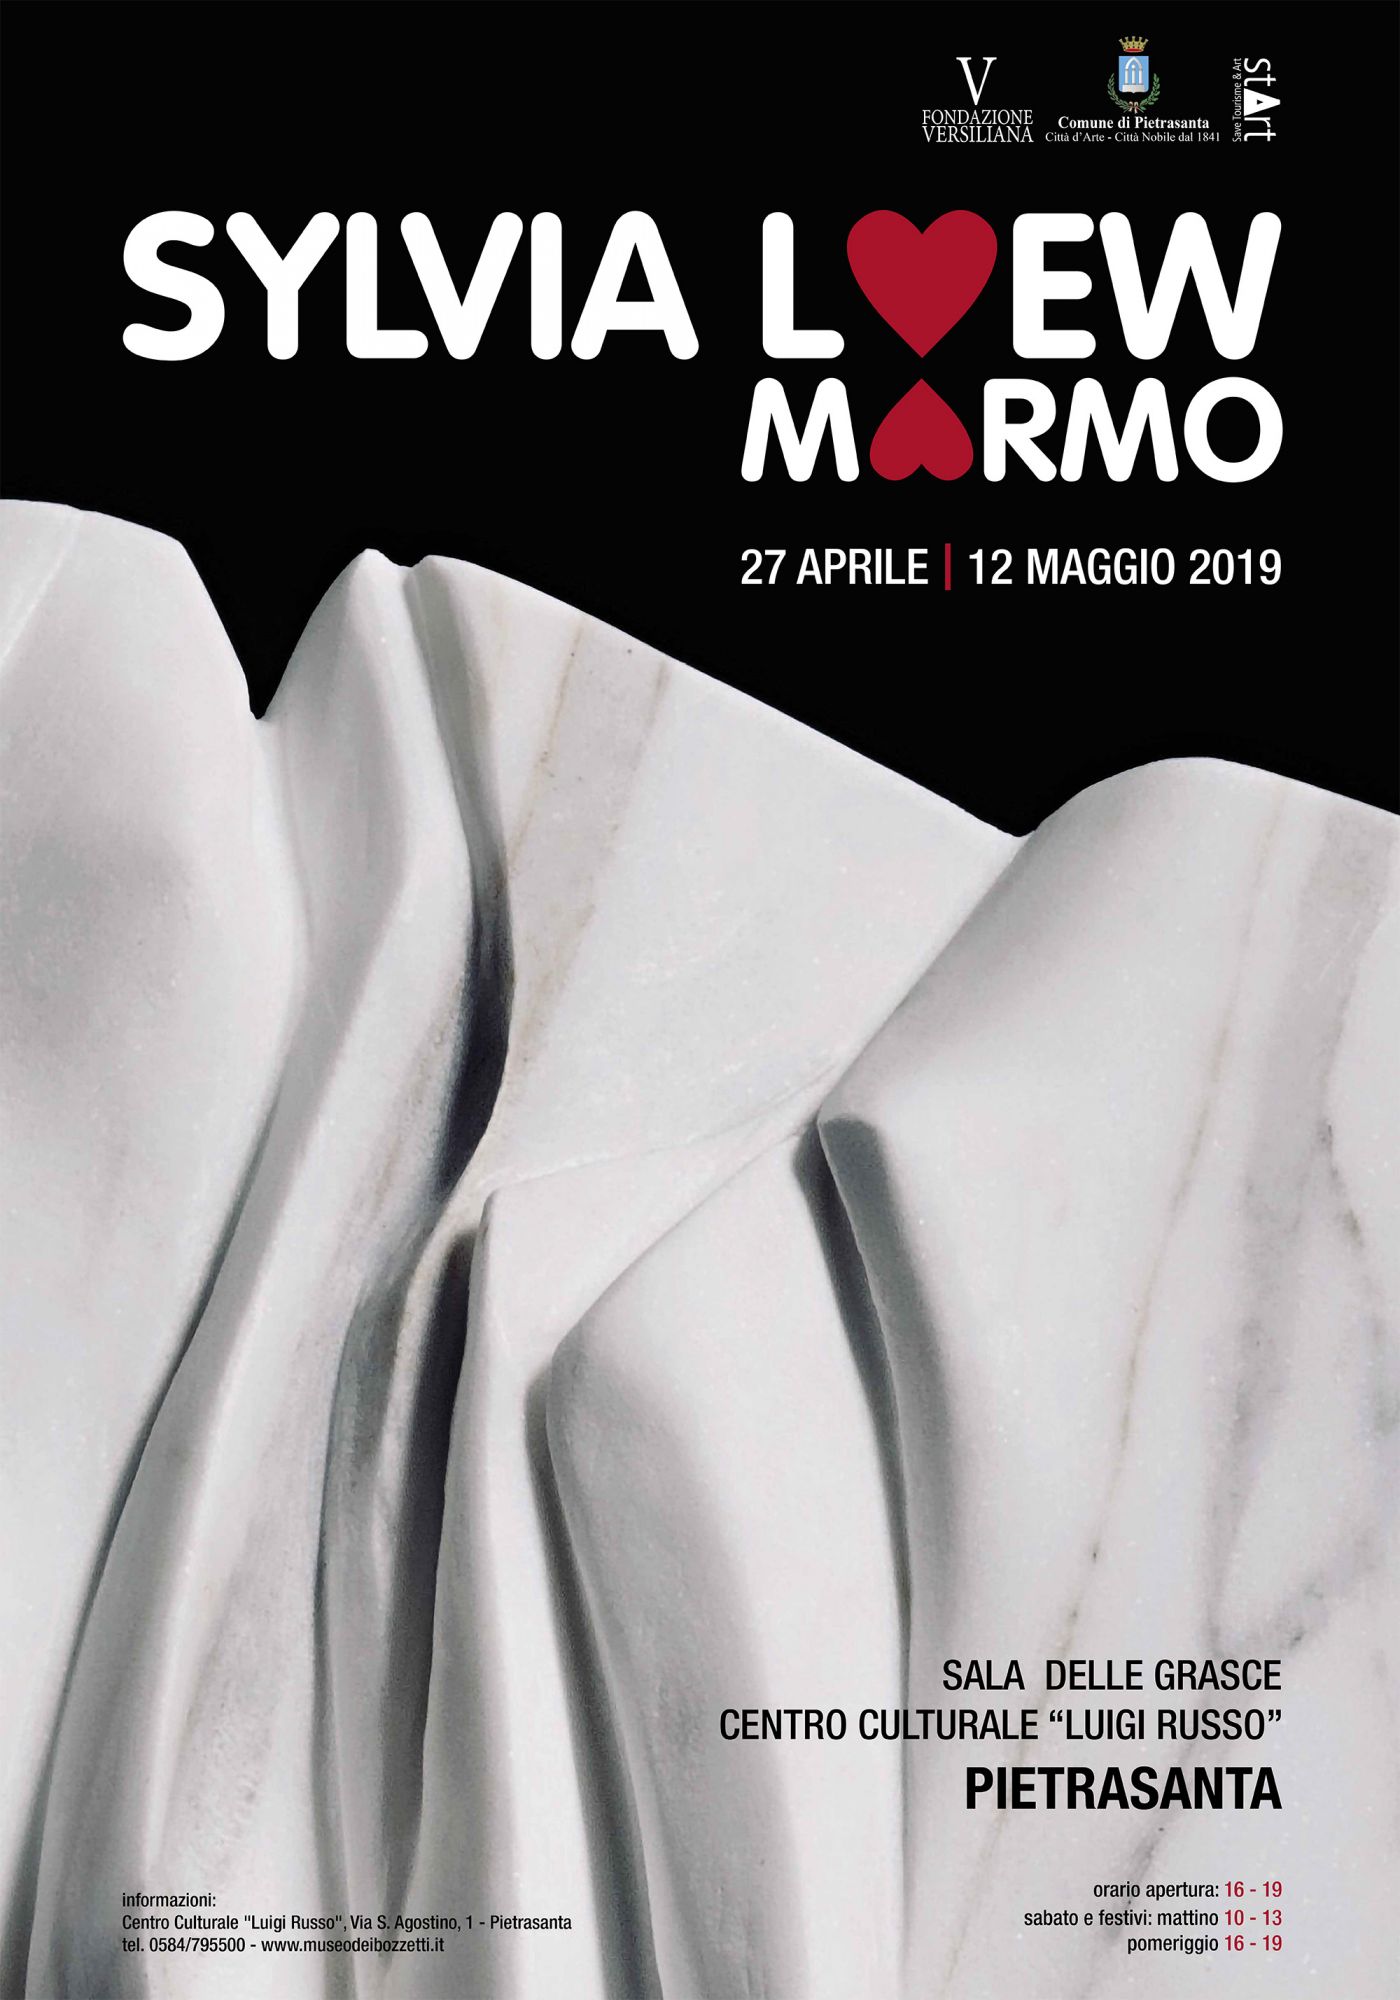 Le sculture di Sylvia Loew in mostra a Pietrasanta